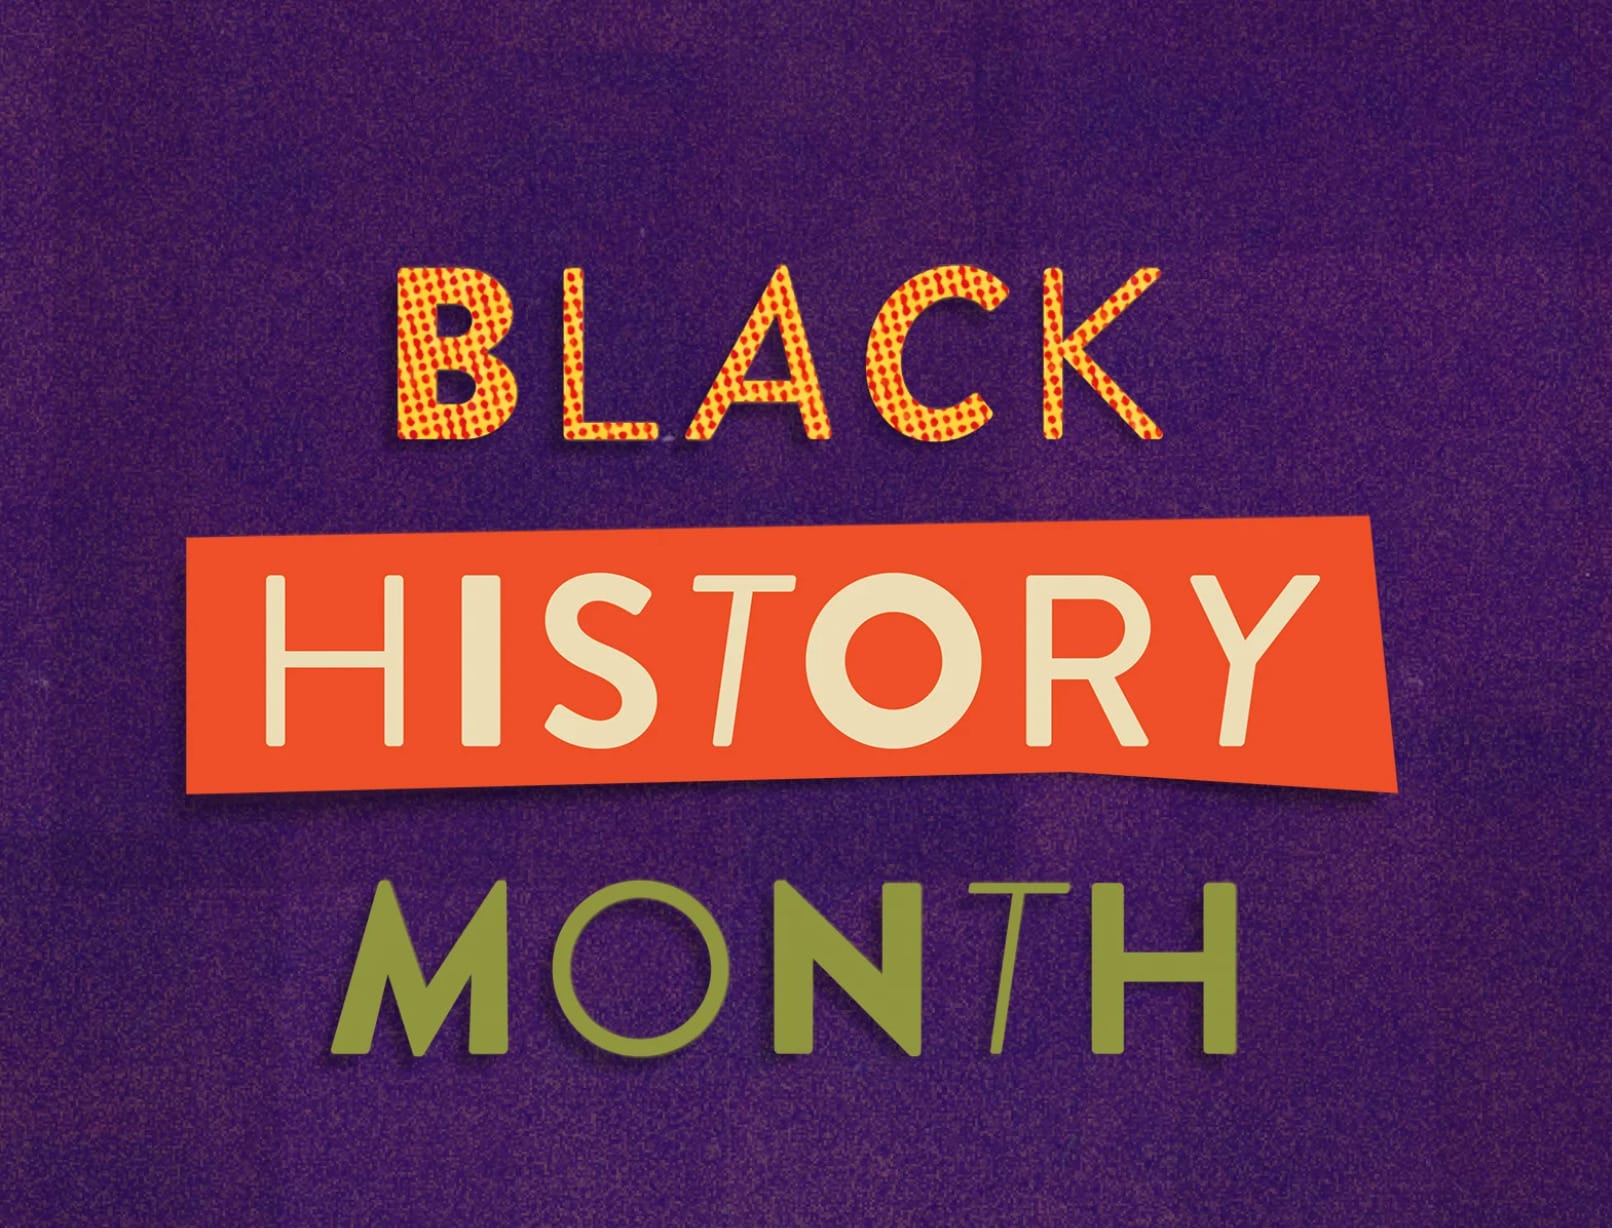 Peloton 2022 Black History Month Celebration. Image credit Peloton.